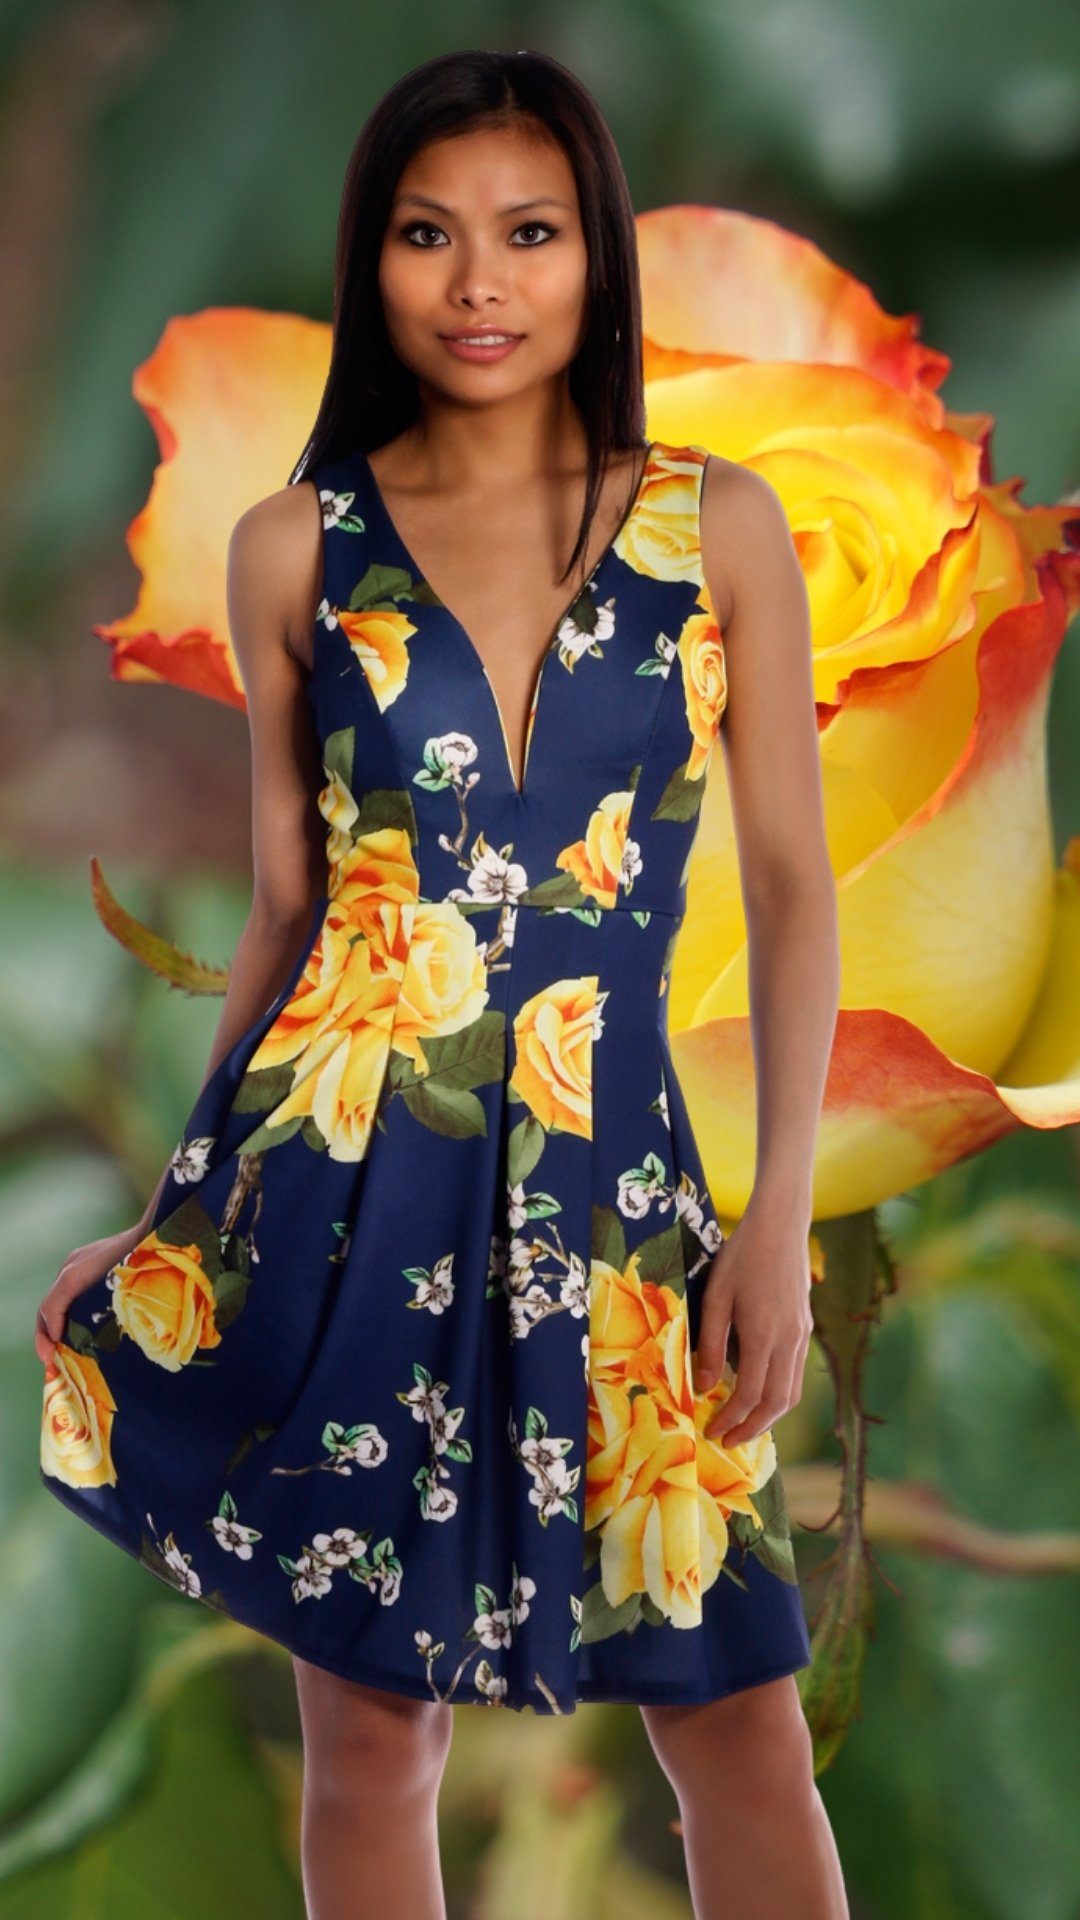 Charis Moda Sommerkleid Trägerkleid "Rosa Gialla" mit Pushup Bügel Dekolleté